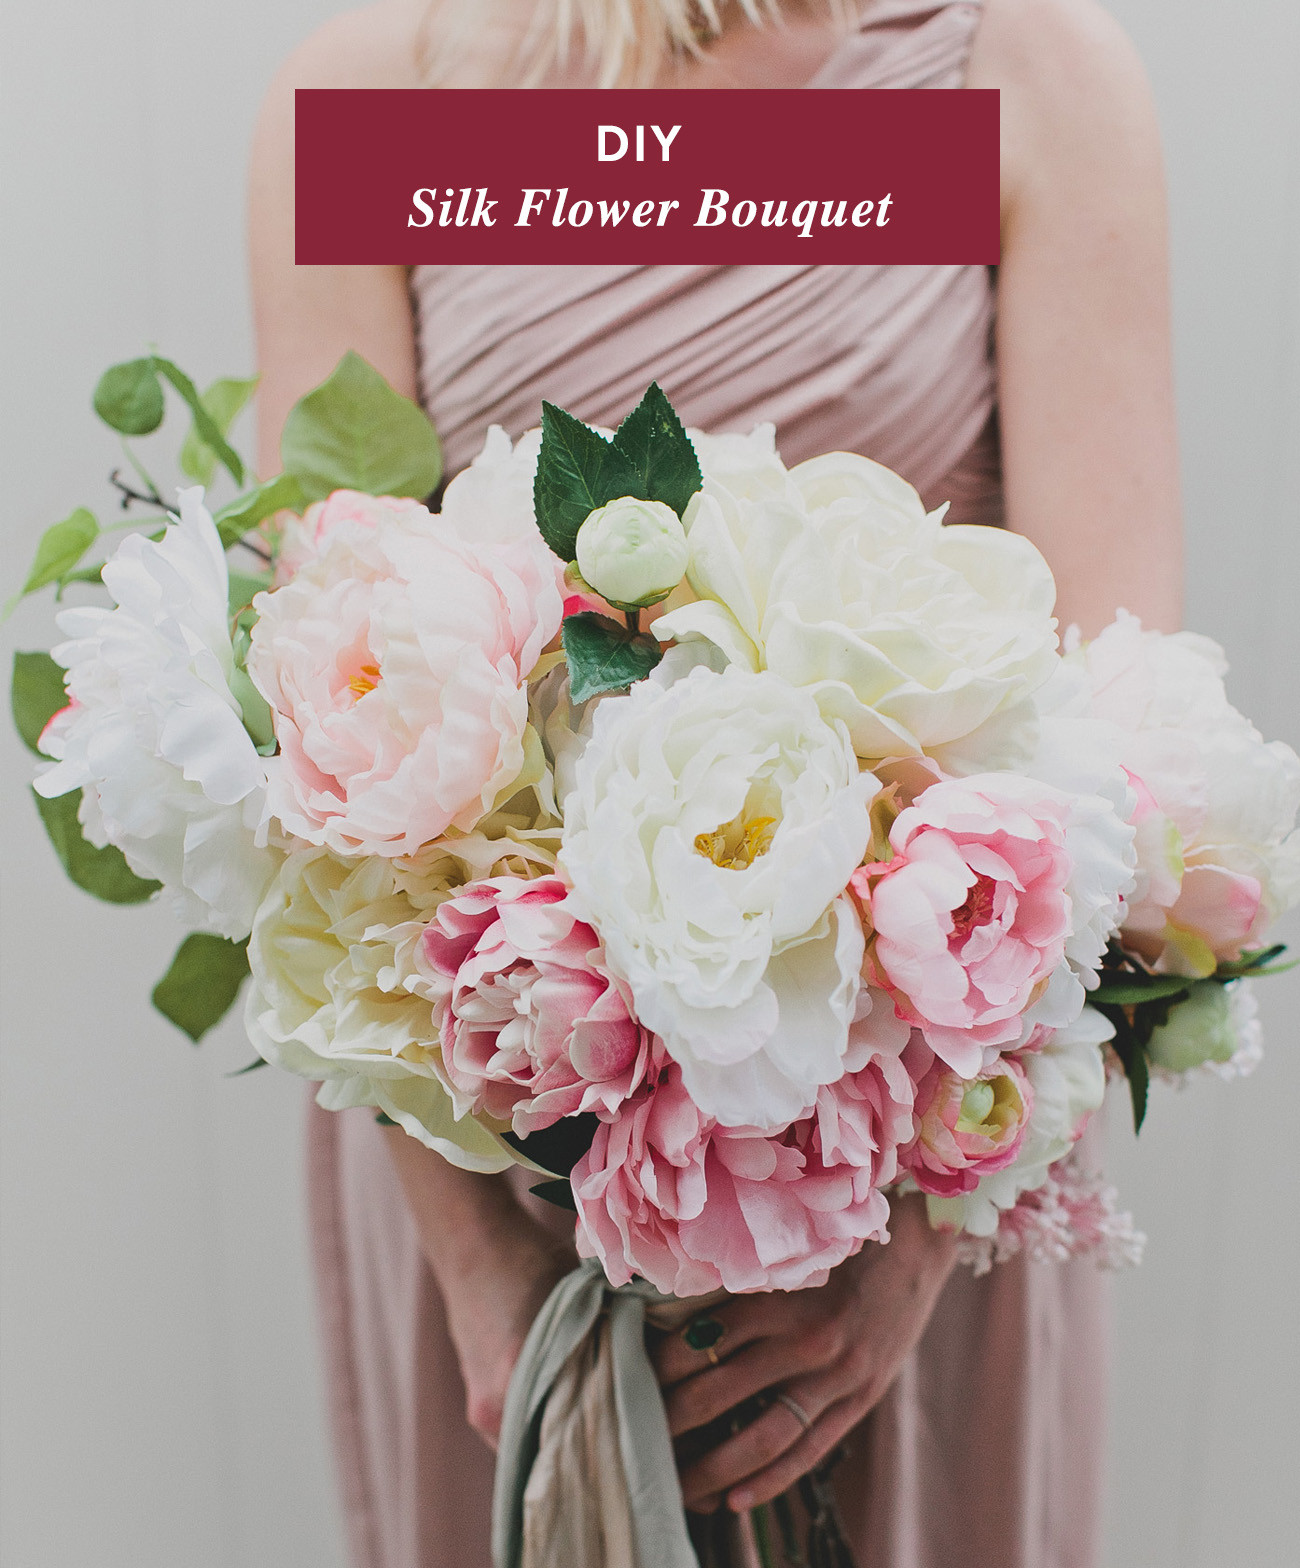 DIY Wedding Flower Bouquet
 DIY Silk Flower Bouquet with Afloral Green Wedding Shoes